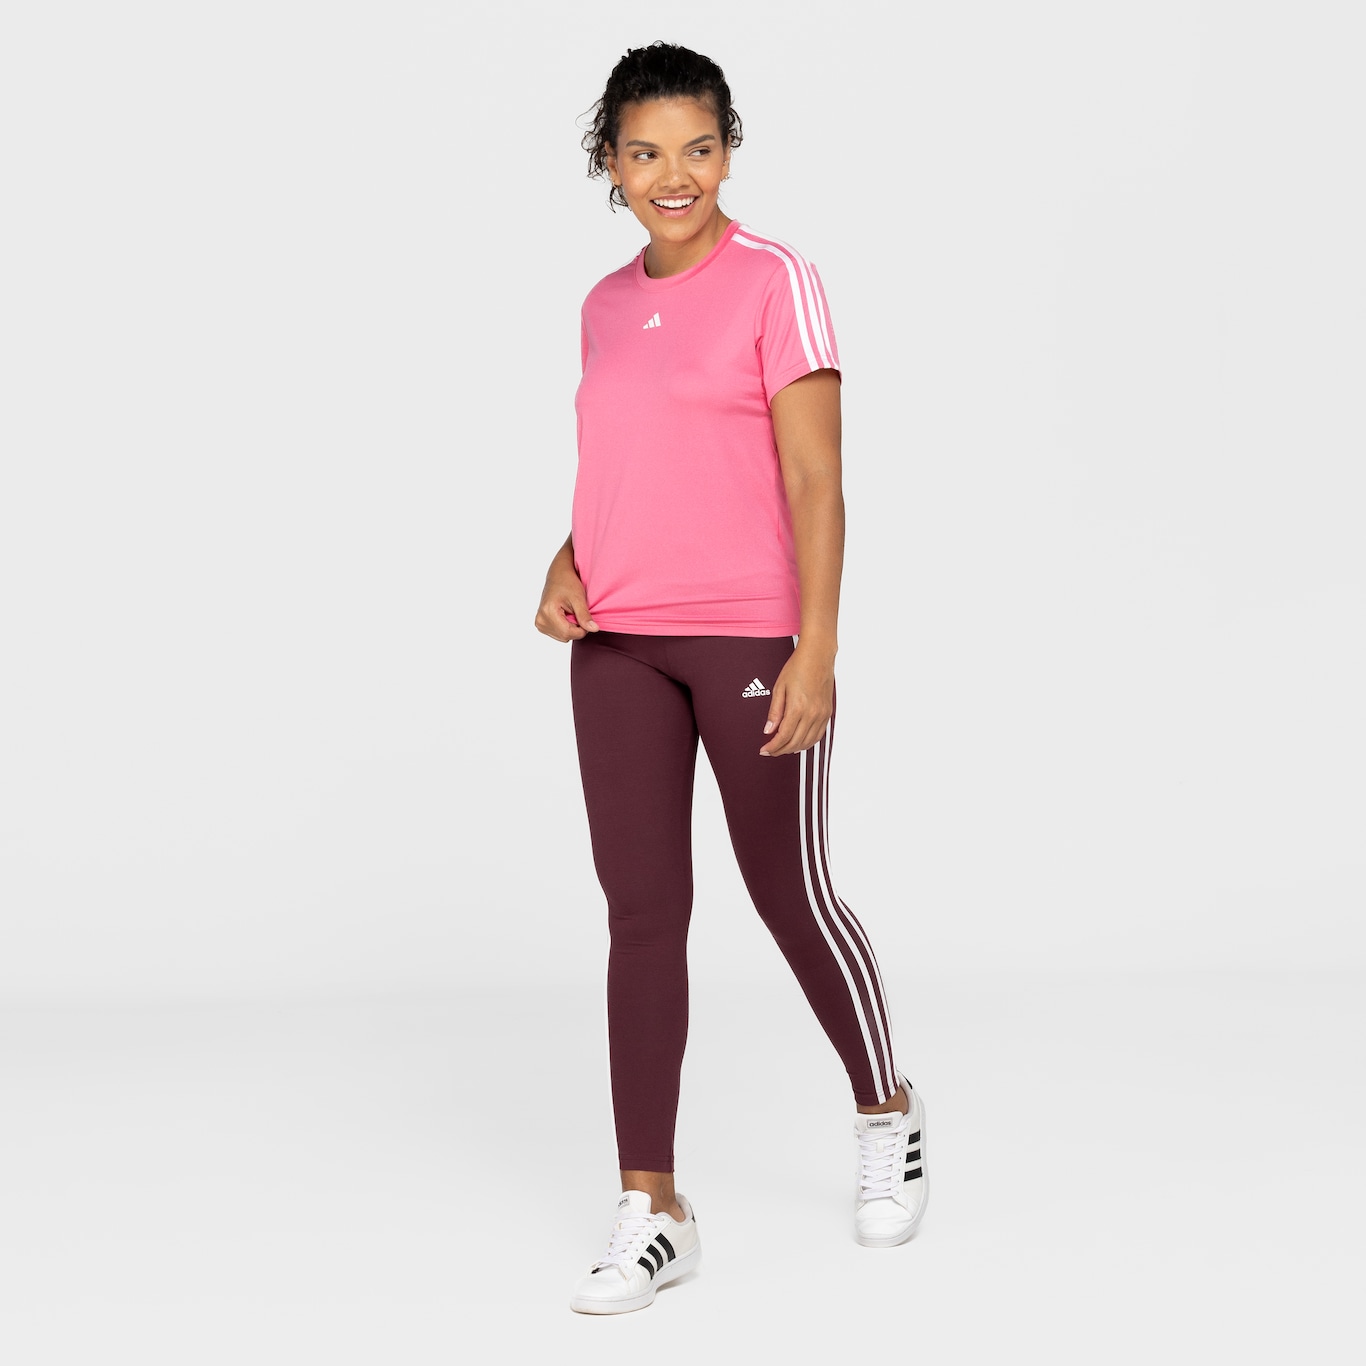 Calça Adidas Legging 3 Stripes Feminina GB4350 - Ativa Esportes